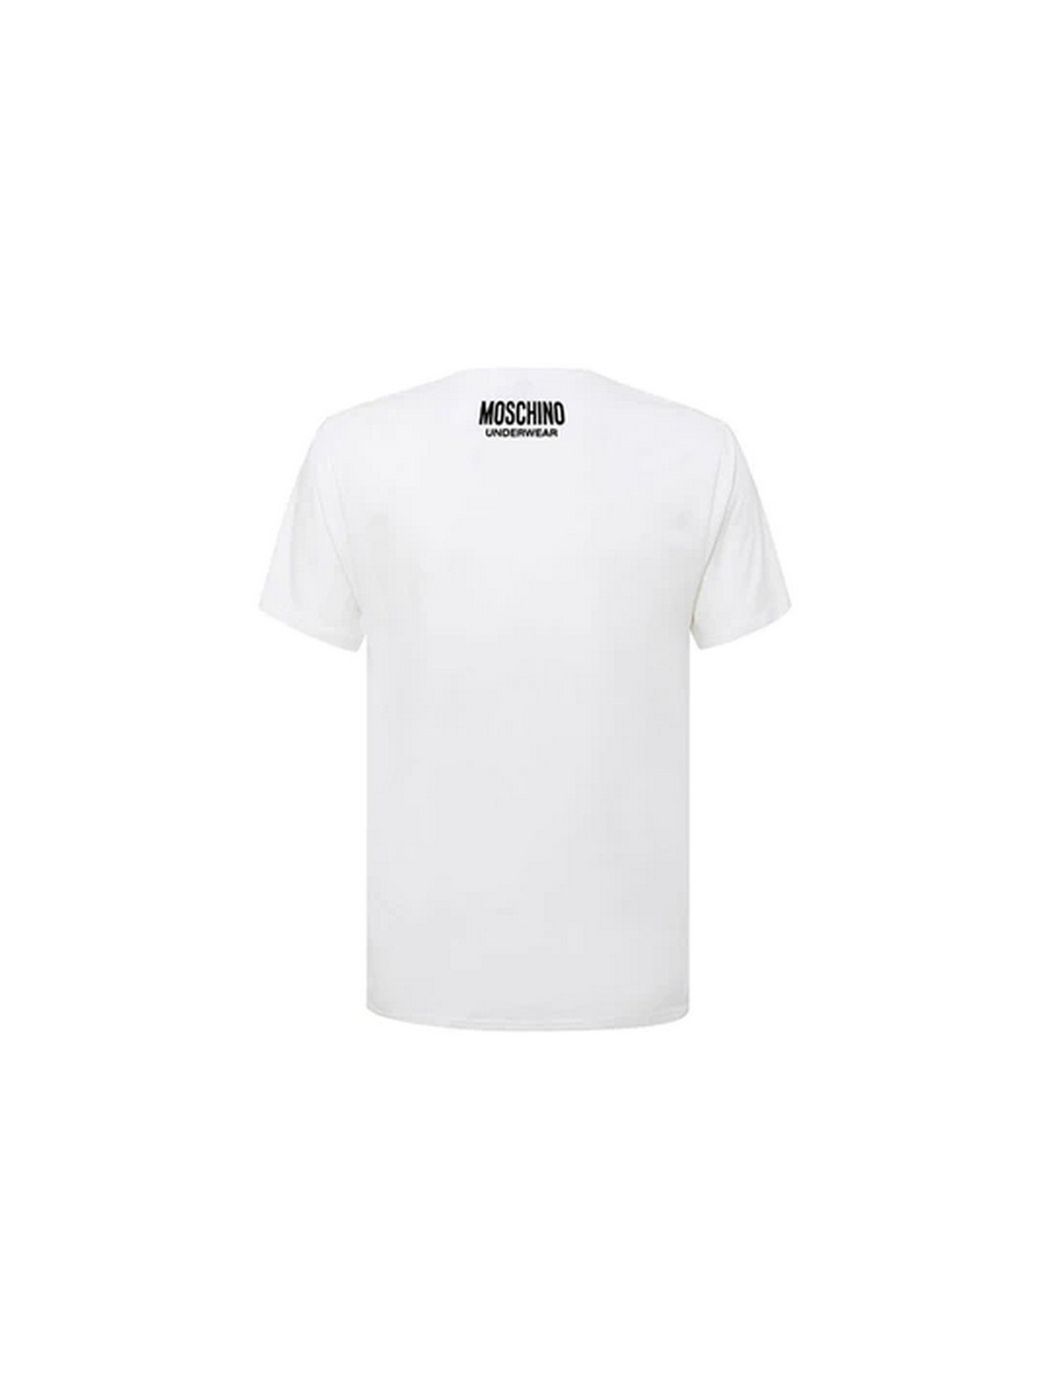 MOSCHINO UNDERWEAR T-shirt et polo hommes A1903 8101 0001 Blanc